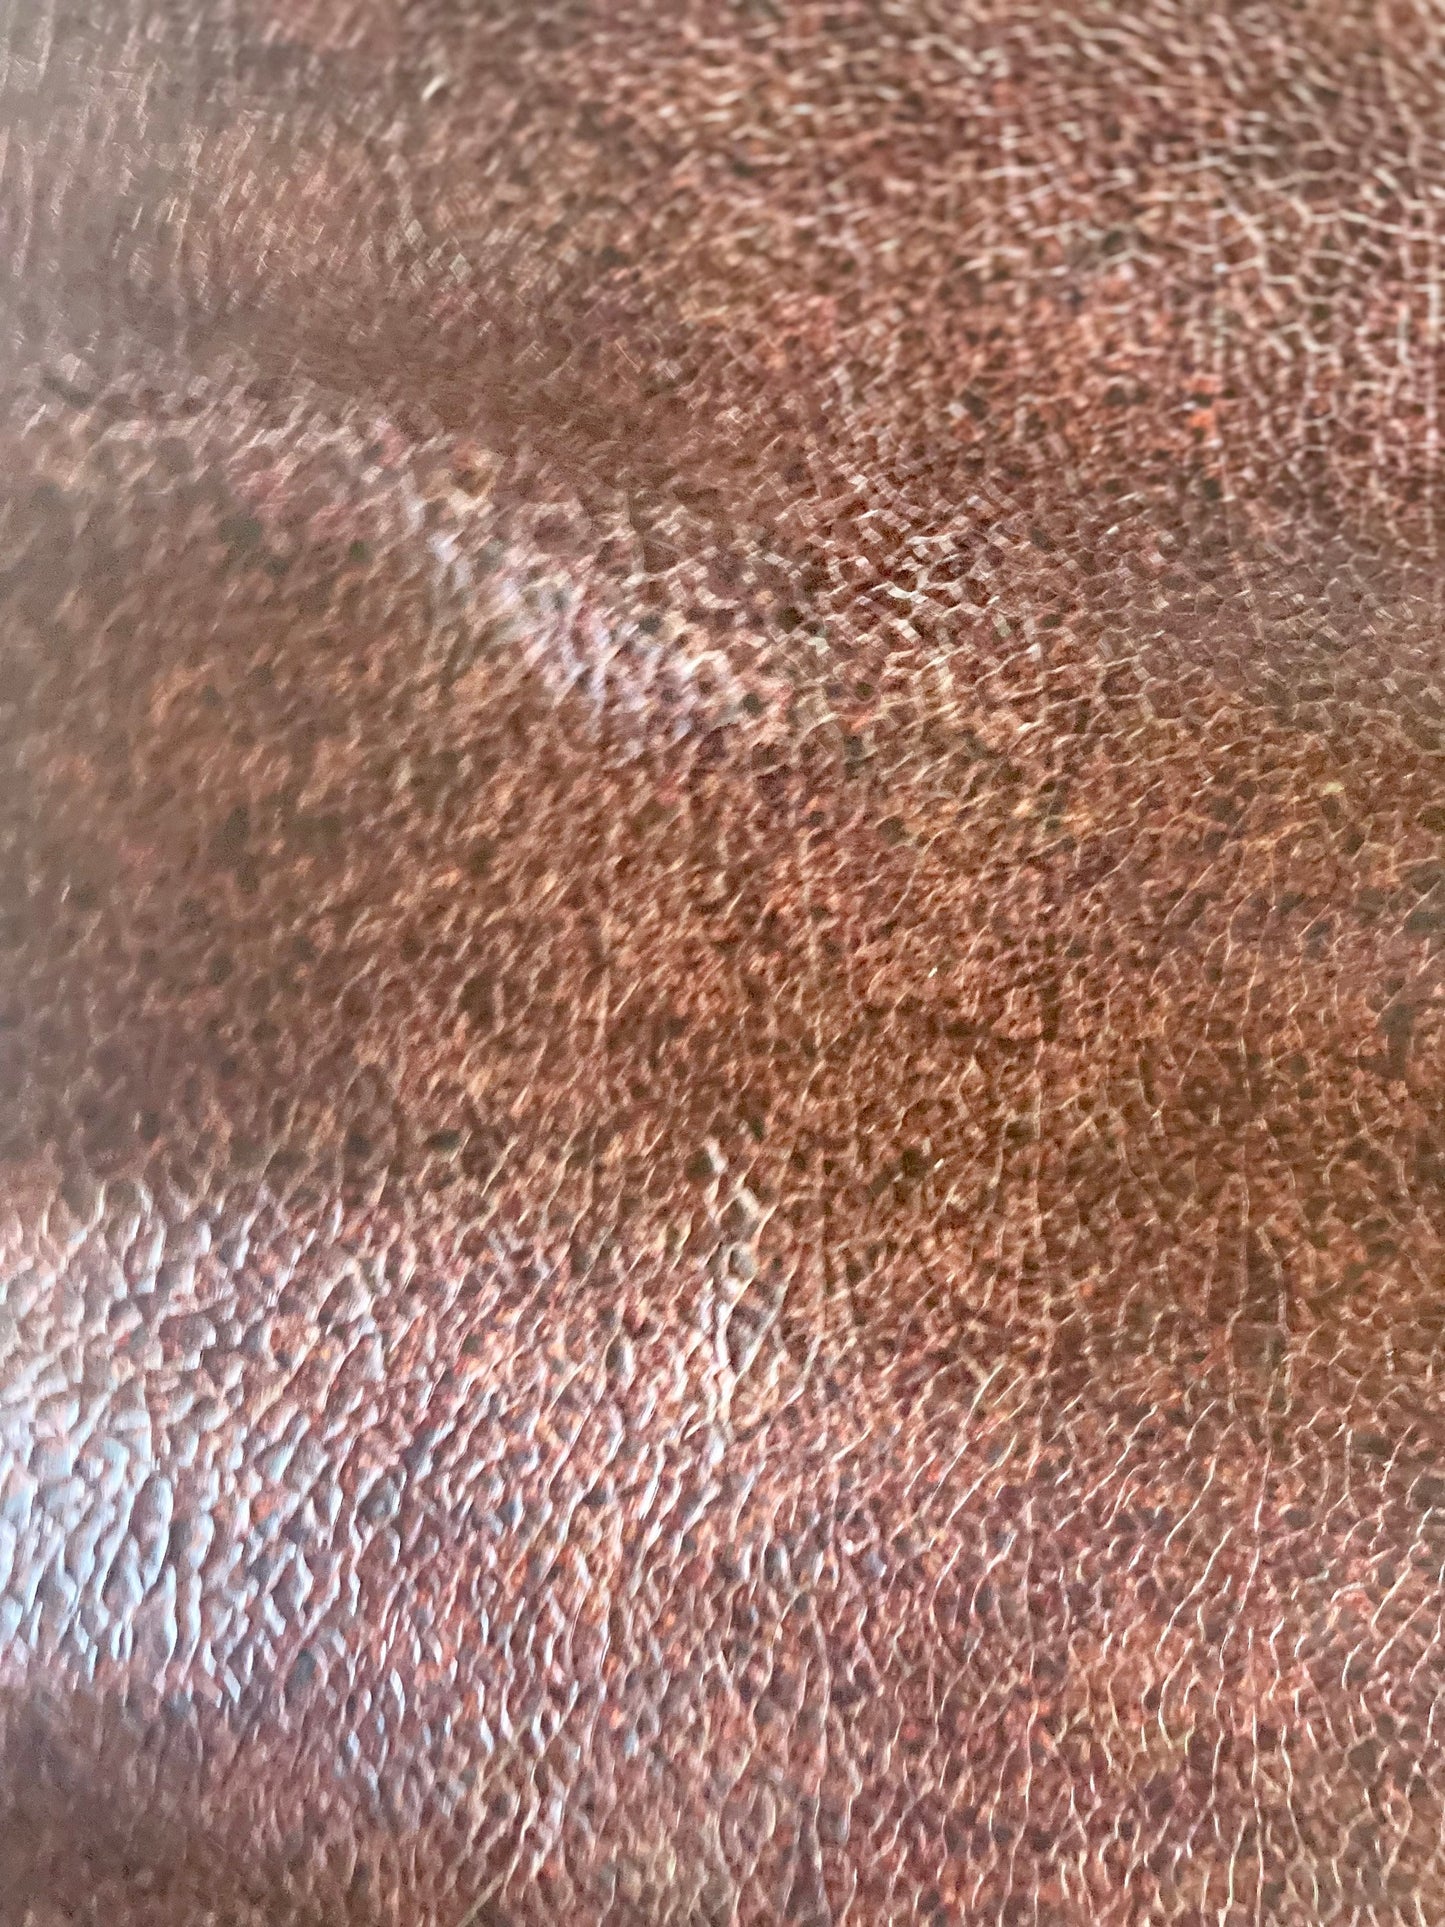 Laser engraved crackle finish leather - Raw Leather - Wholesale Leather 1-2oz